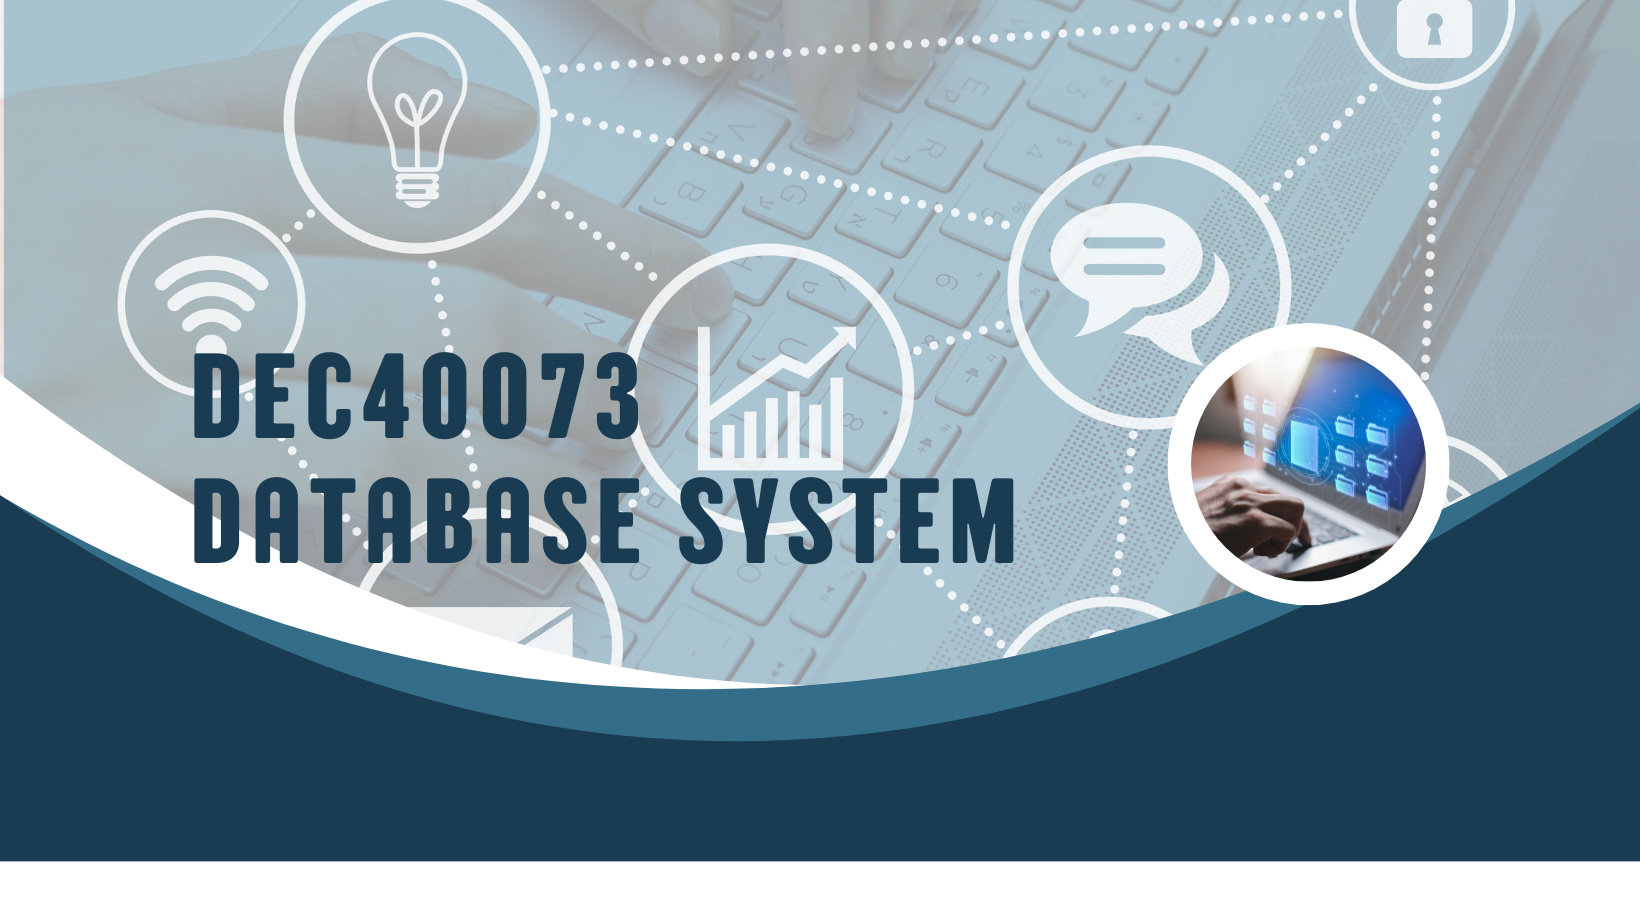 DEC40073 DATABASE SYSTEM